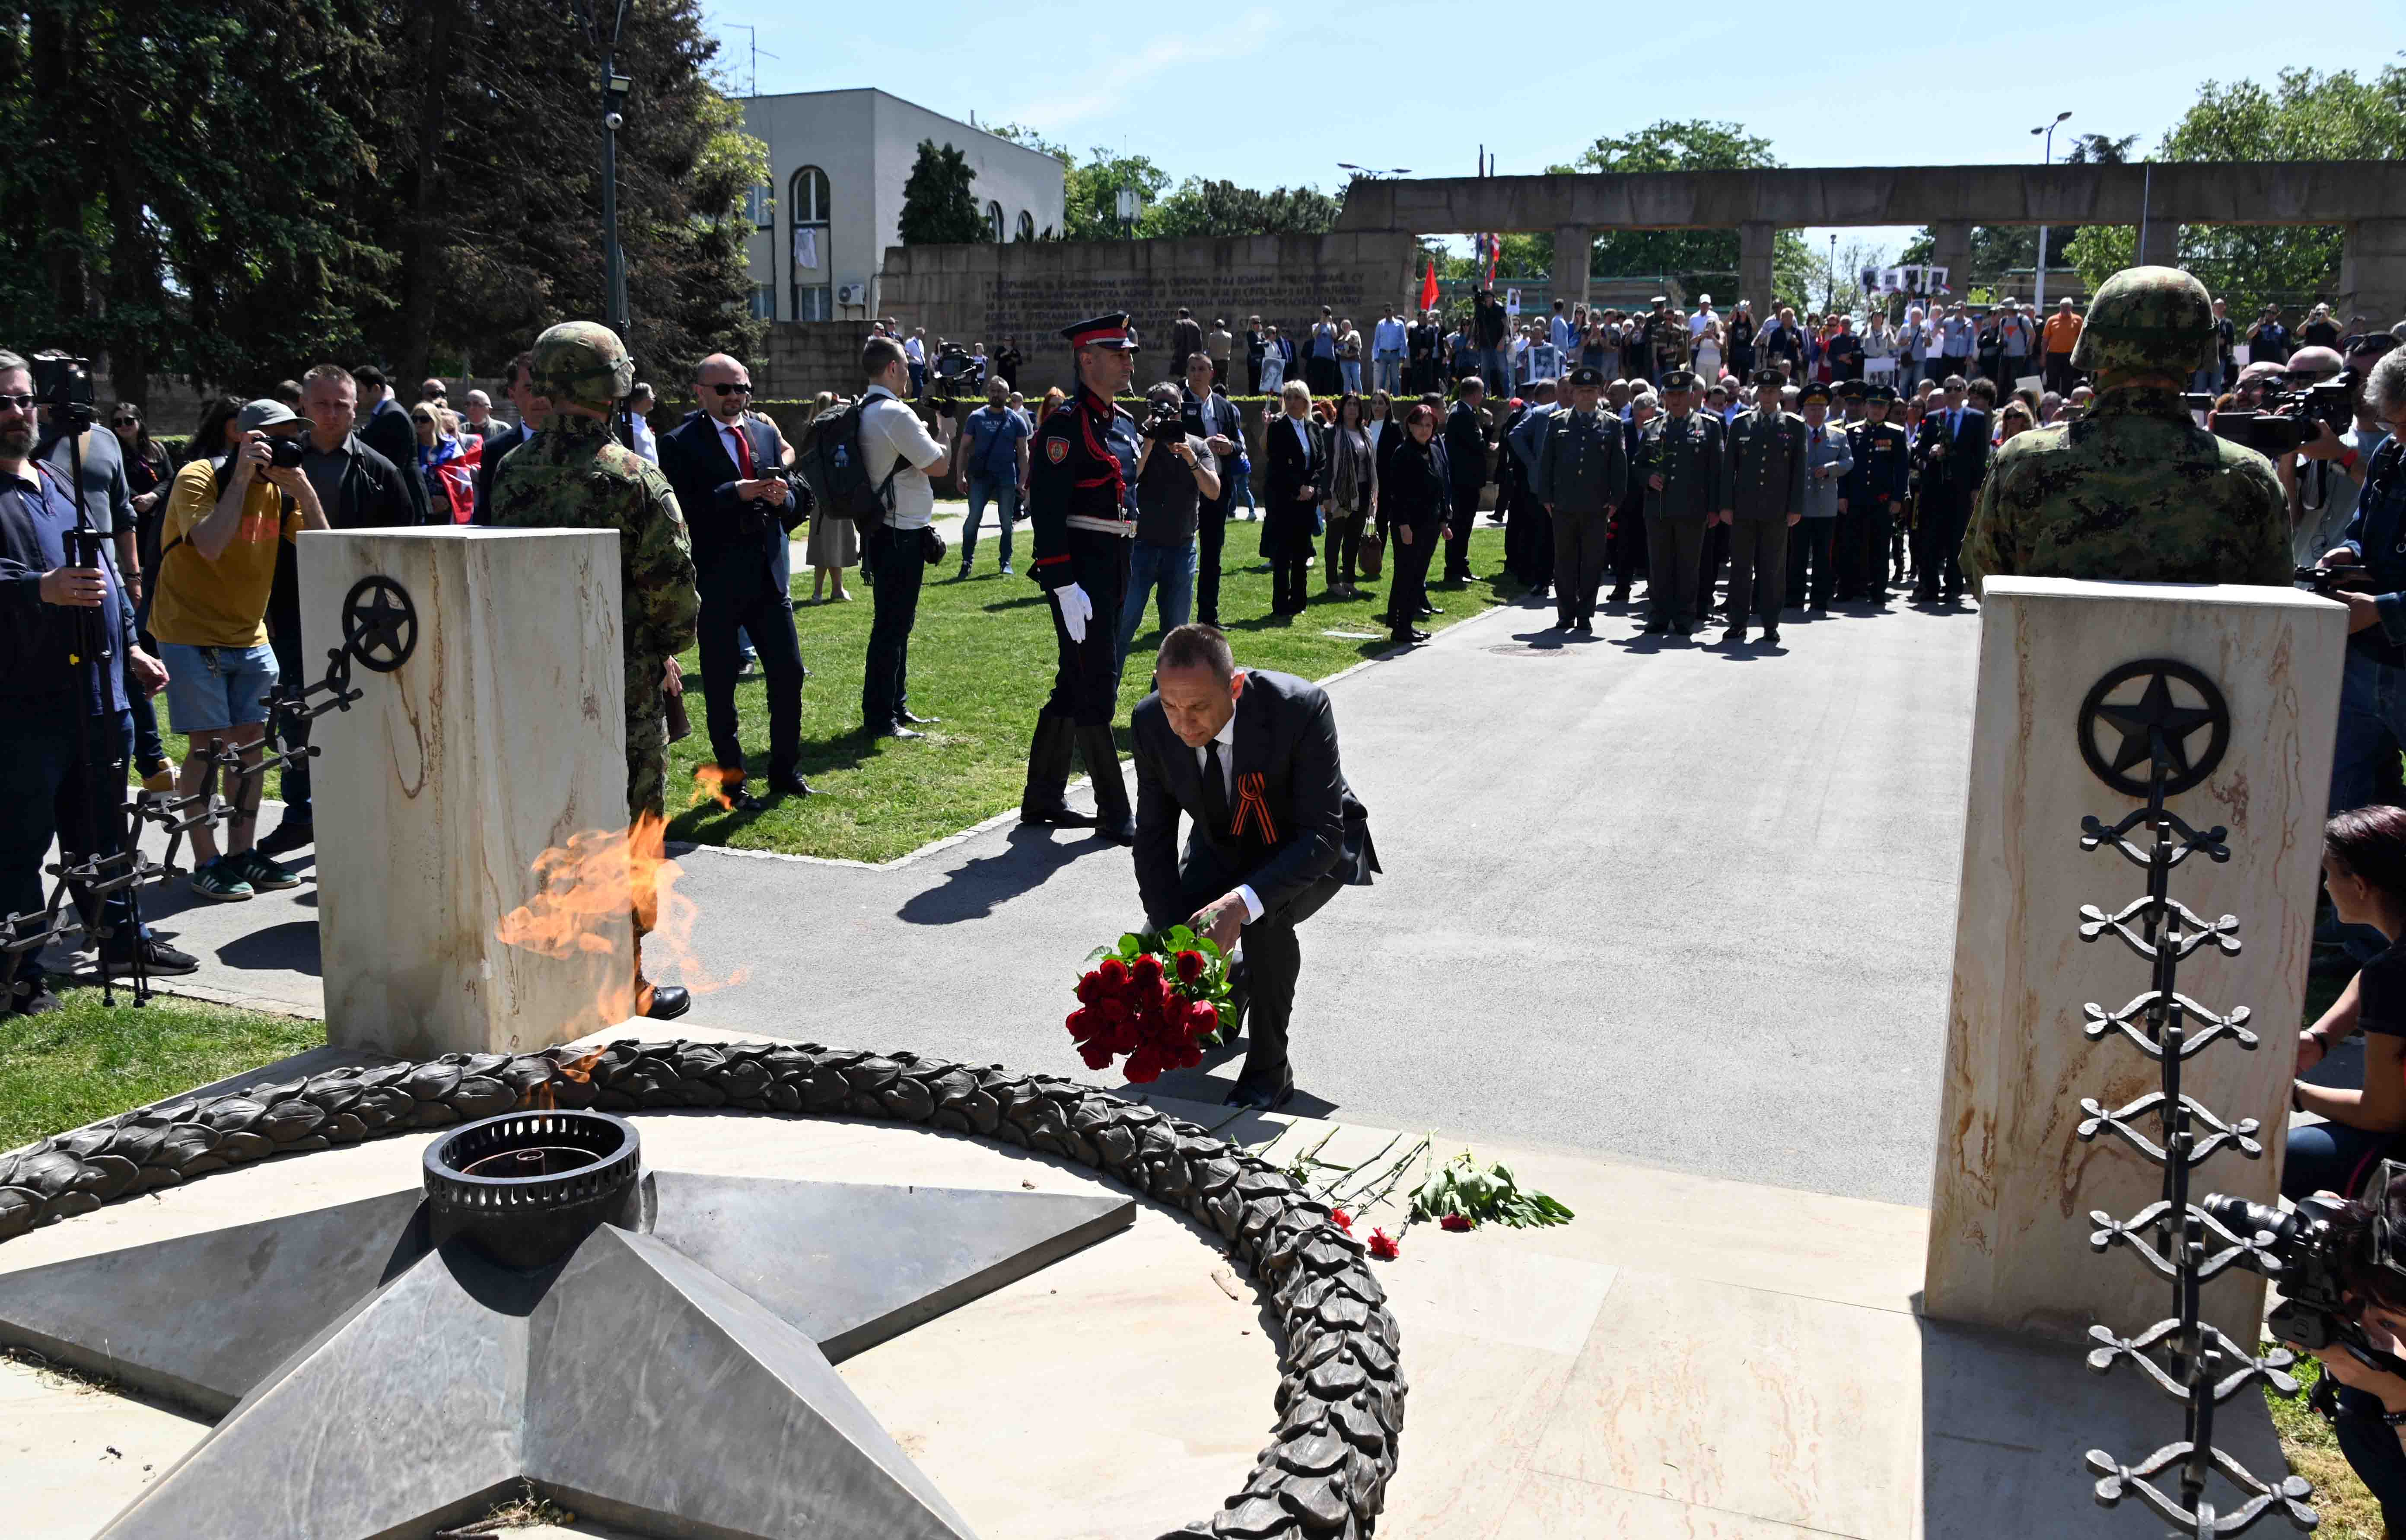 Ministar Vulin položio je vence na spomenik Crvenoarmejcu i na spomenik „Večnoj vatri“ na Groblјu oslobodilaca Beograda